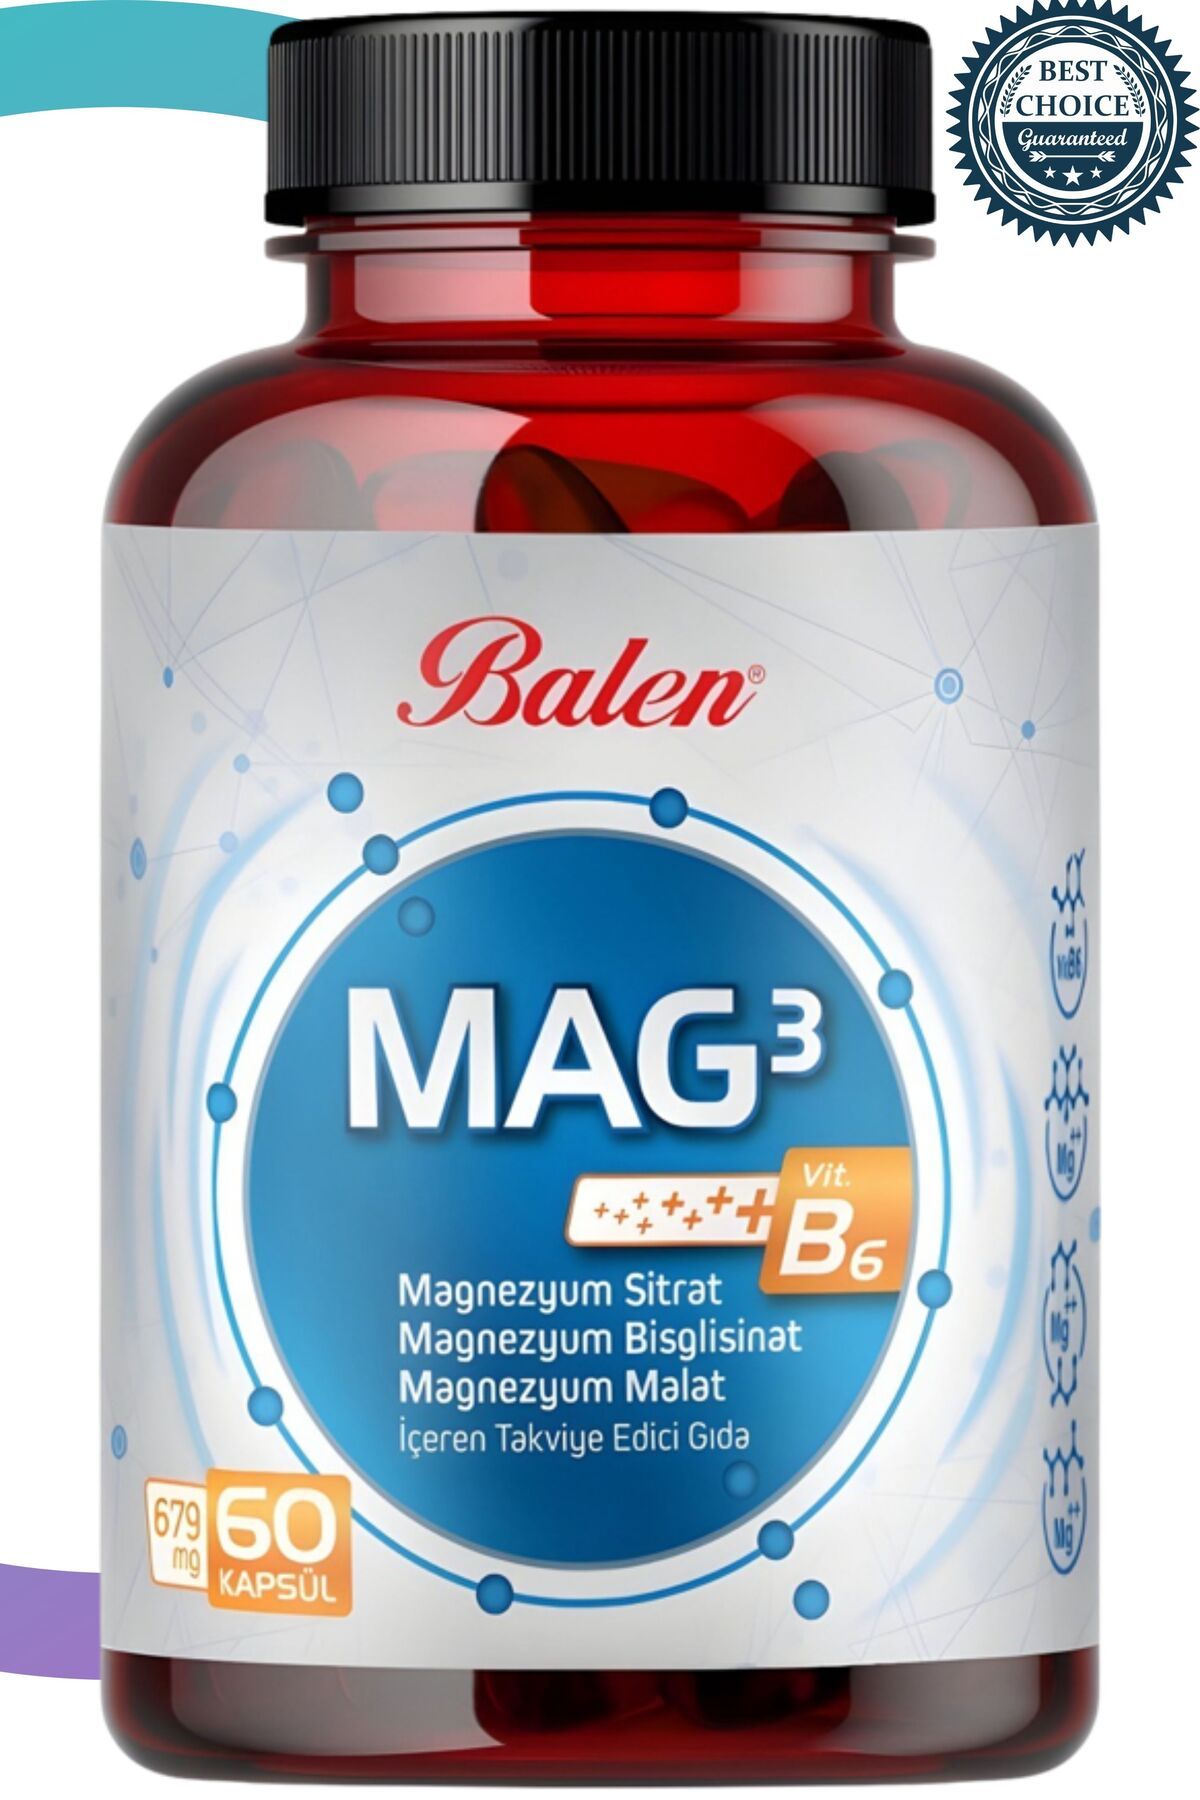 Balen Mag 3 Magnezyum Sitrat,Bisglisinat,Malat 679 Mg,60 Kapsül